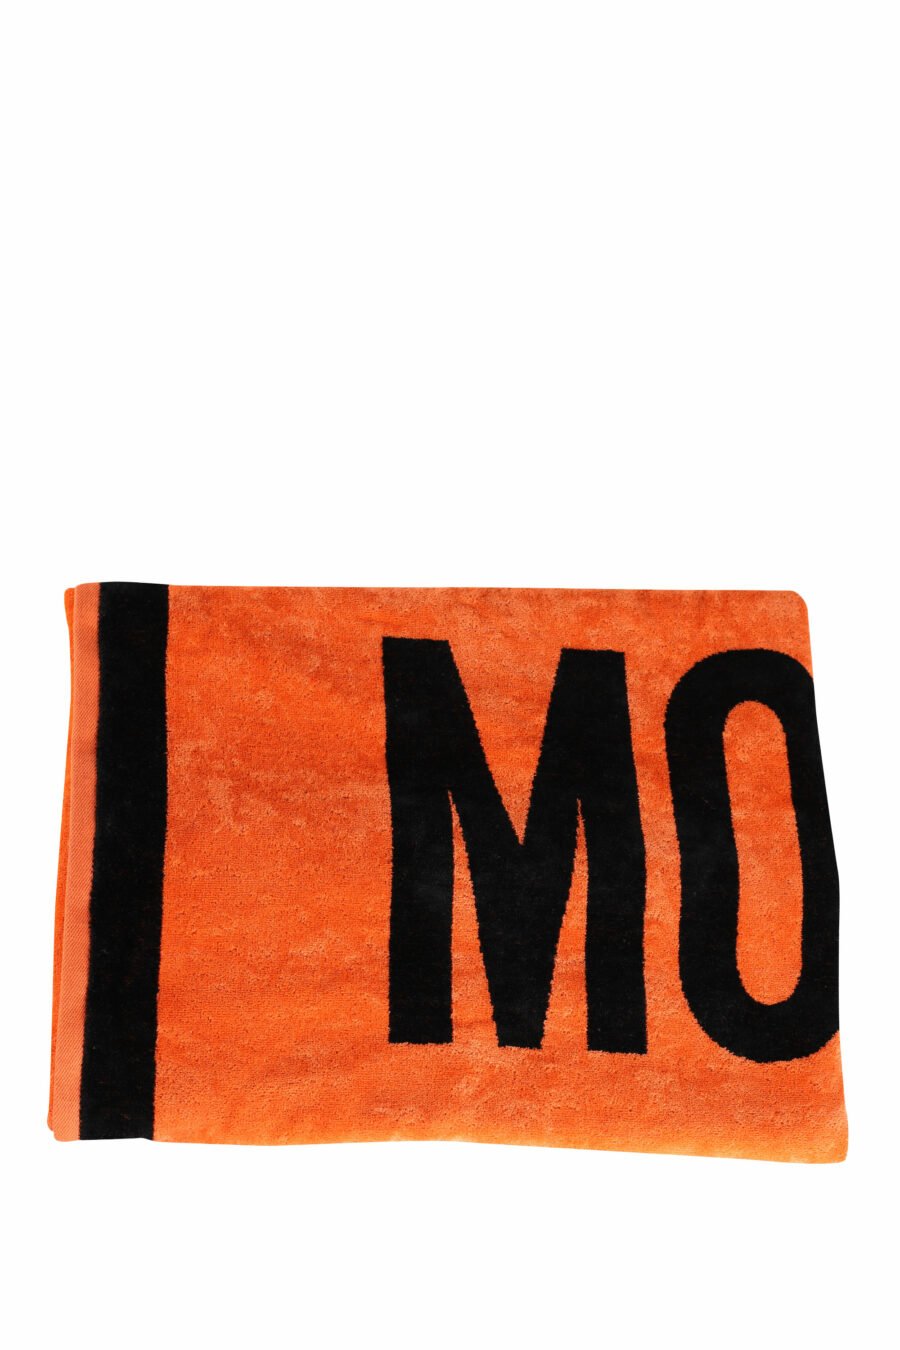 Toalha laranja com maxilogo - IMG 1027